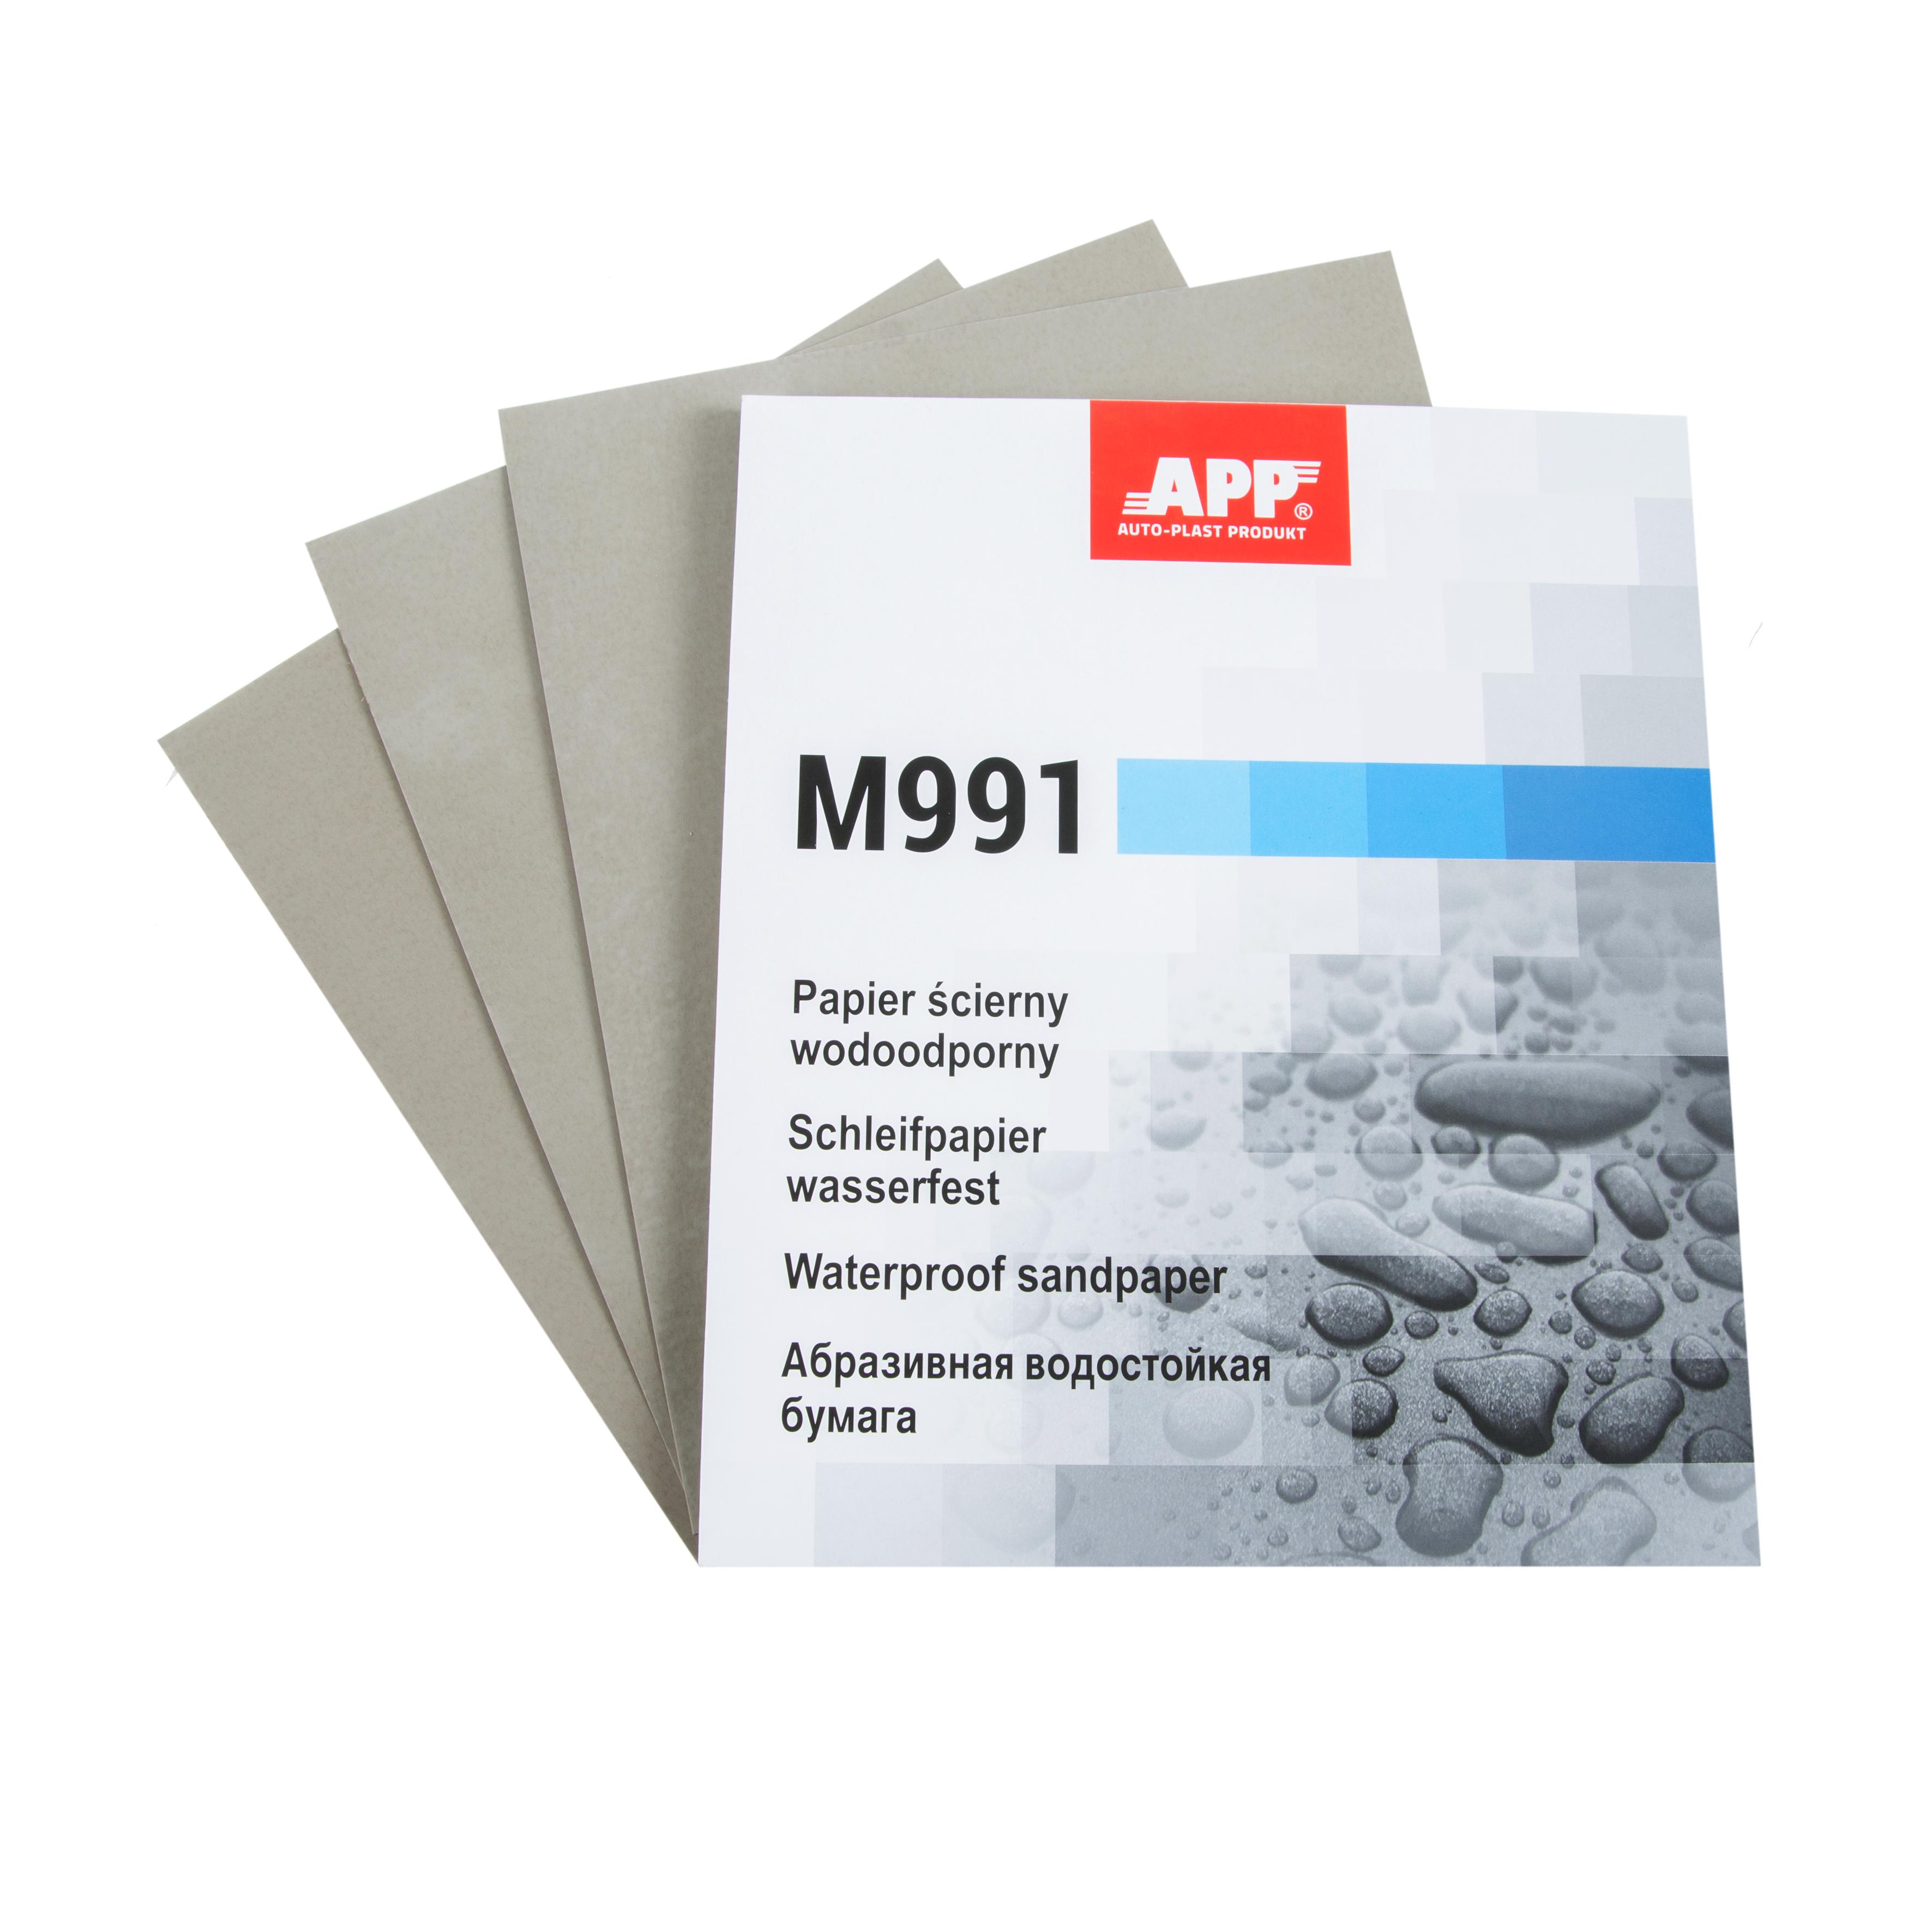 APP 40MW2500 Schleifpapier M991 wasserfest P2500 blau 230 mm x 280 mm 50 Stück | Wasserschleifpapier WP waterproof Blätter Sheets